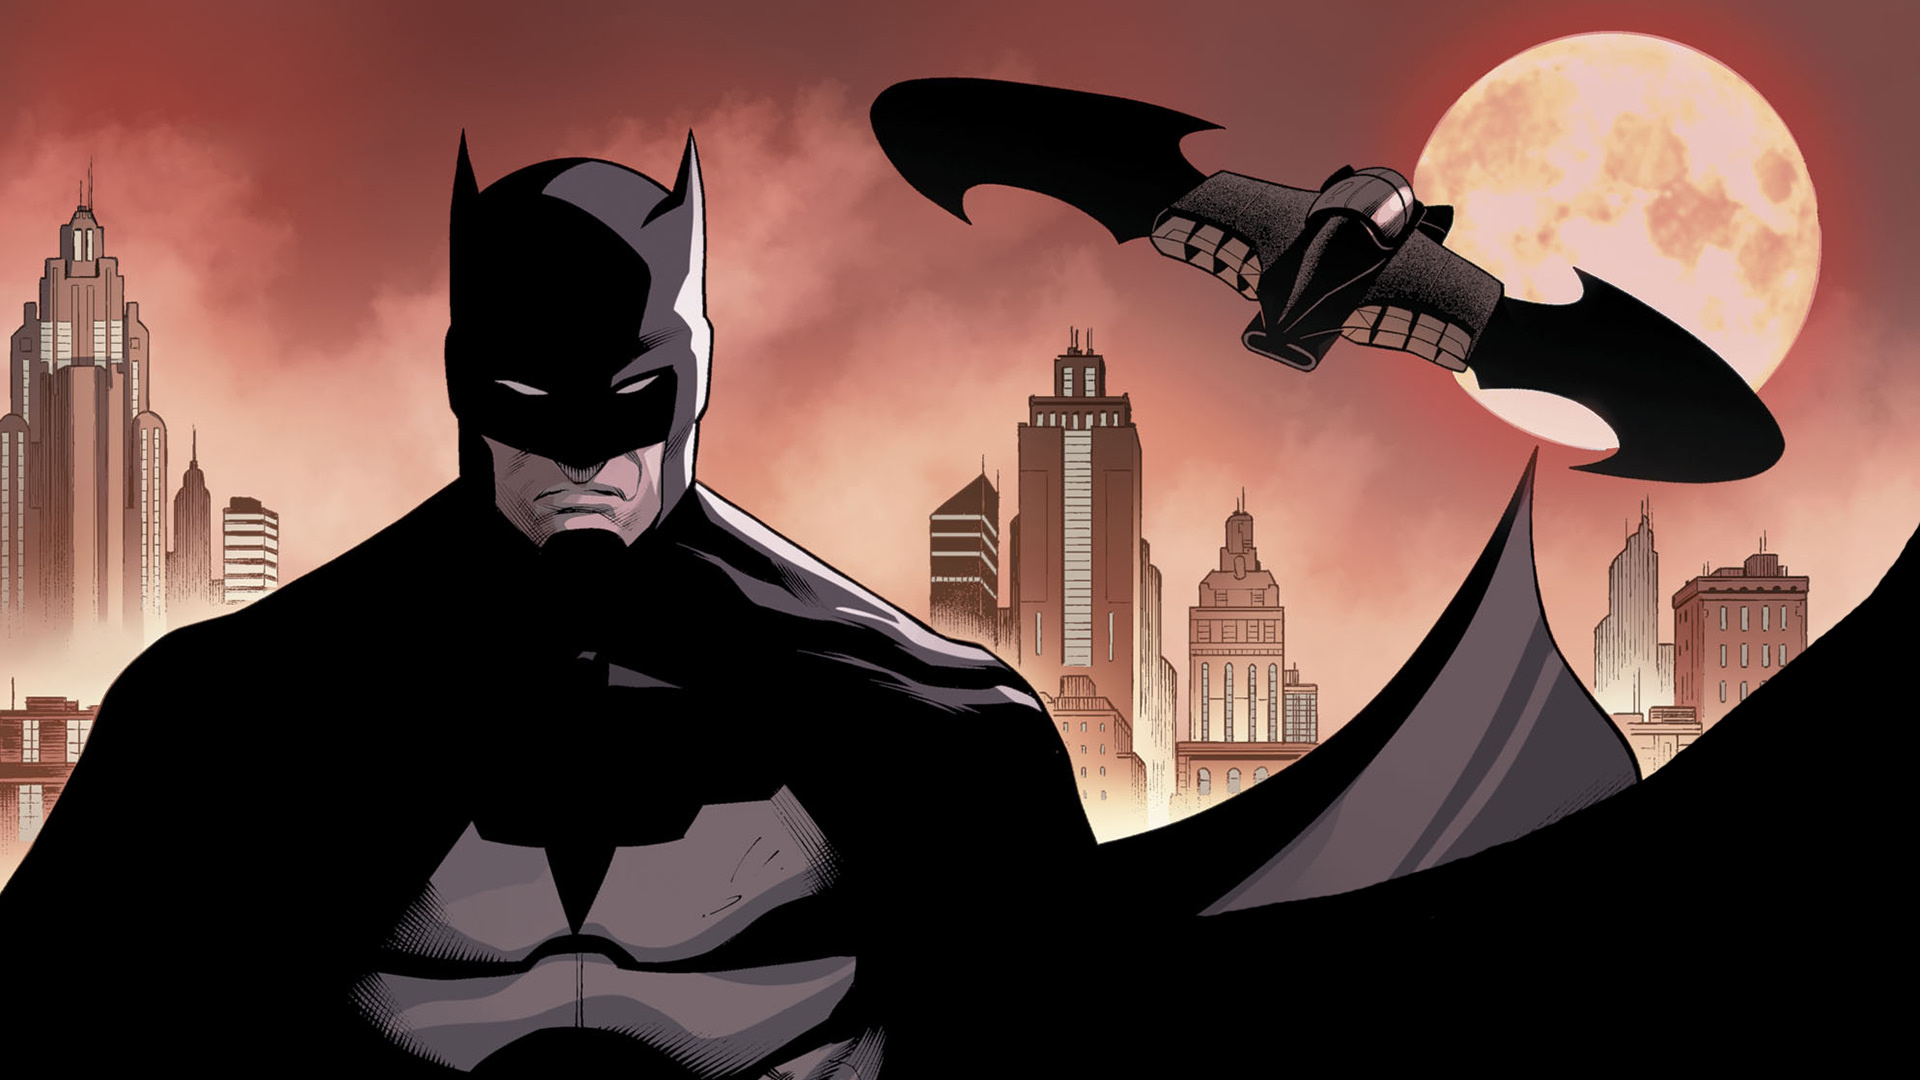 Angry Batman, Dark complexion, Bat-ready stance, Comics aesthetic, Overpowering presence, 1920x1080 Full HD Desktop